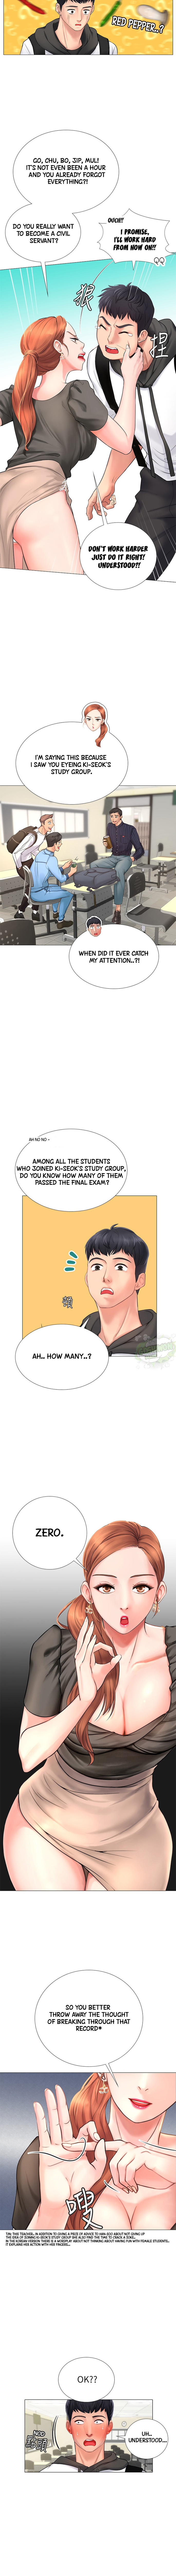 Should I Study at Noryangjin? - Chapter 3 Page 12